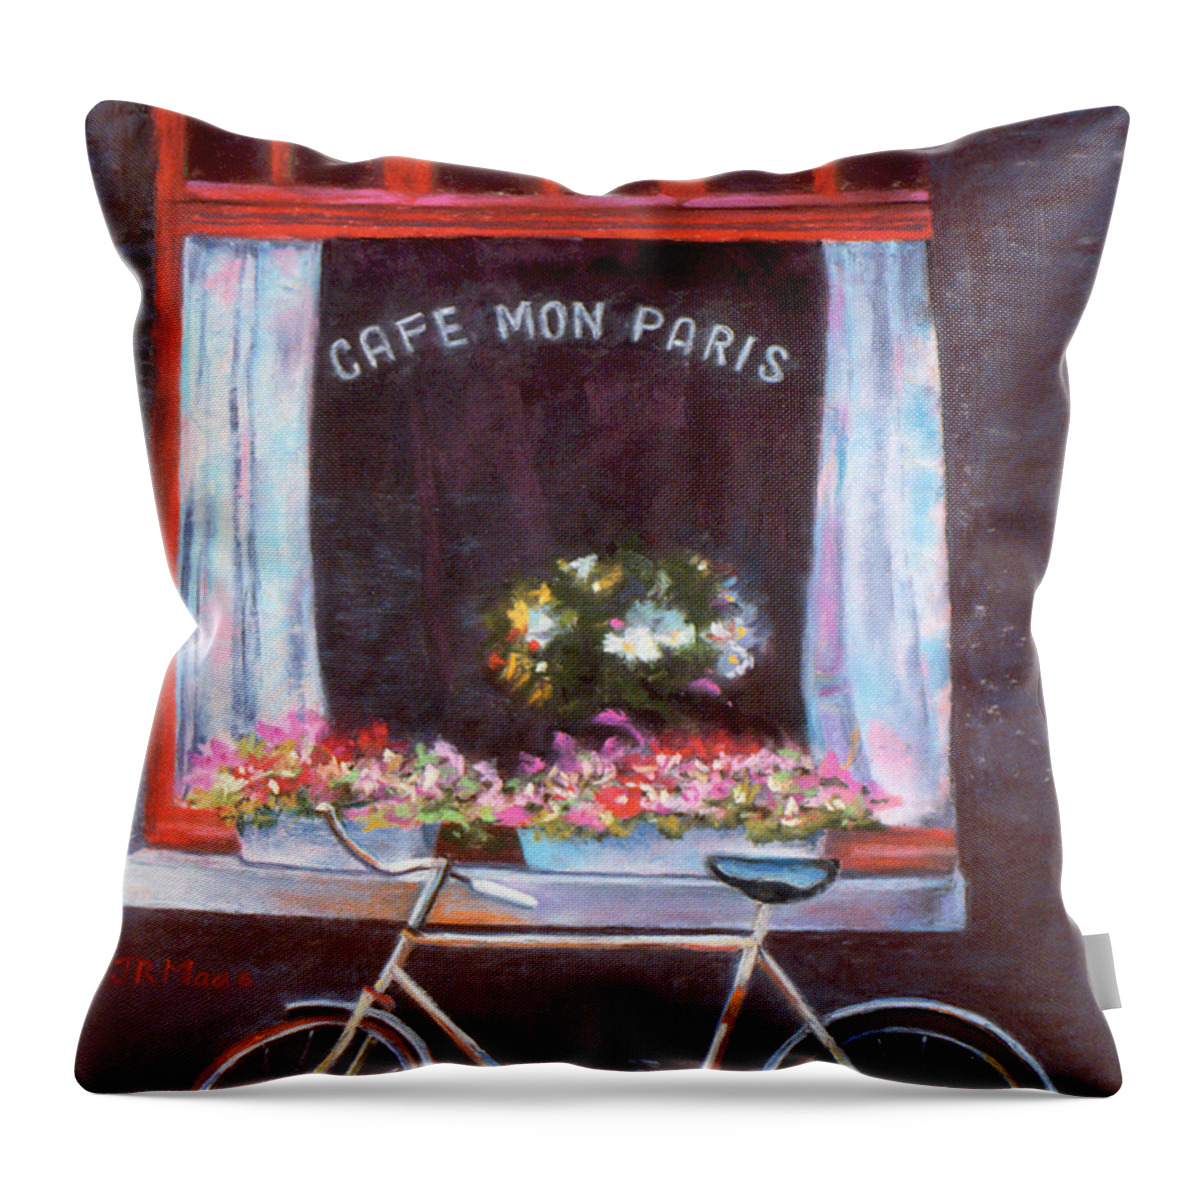 Cafe Mon Paris Throw Pillow featuring the pastel Cafe mon Paris by Julie Maas